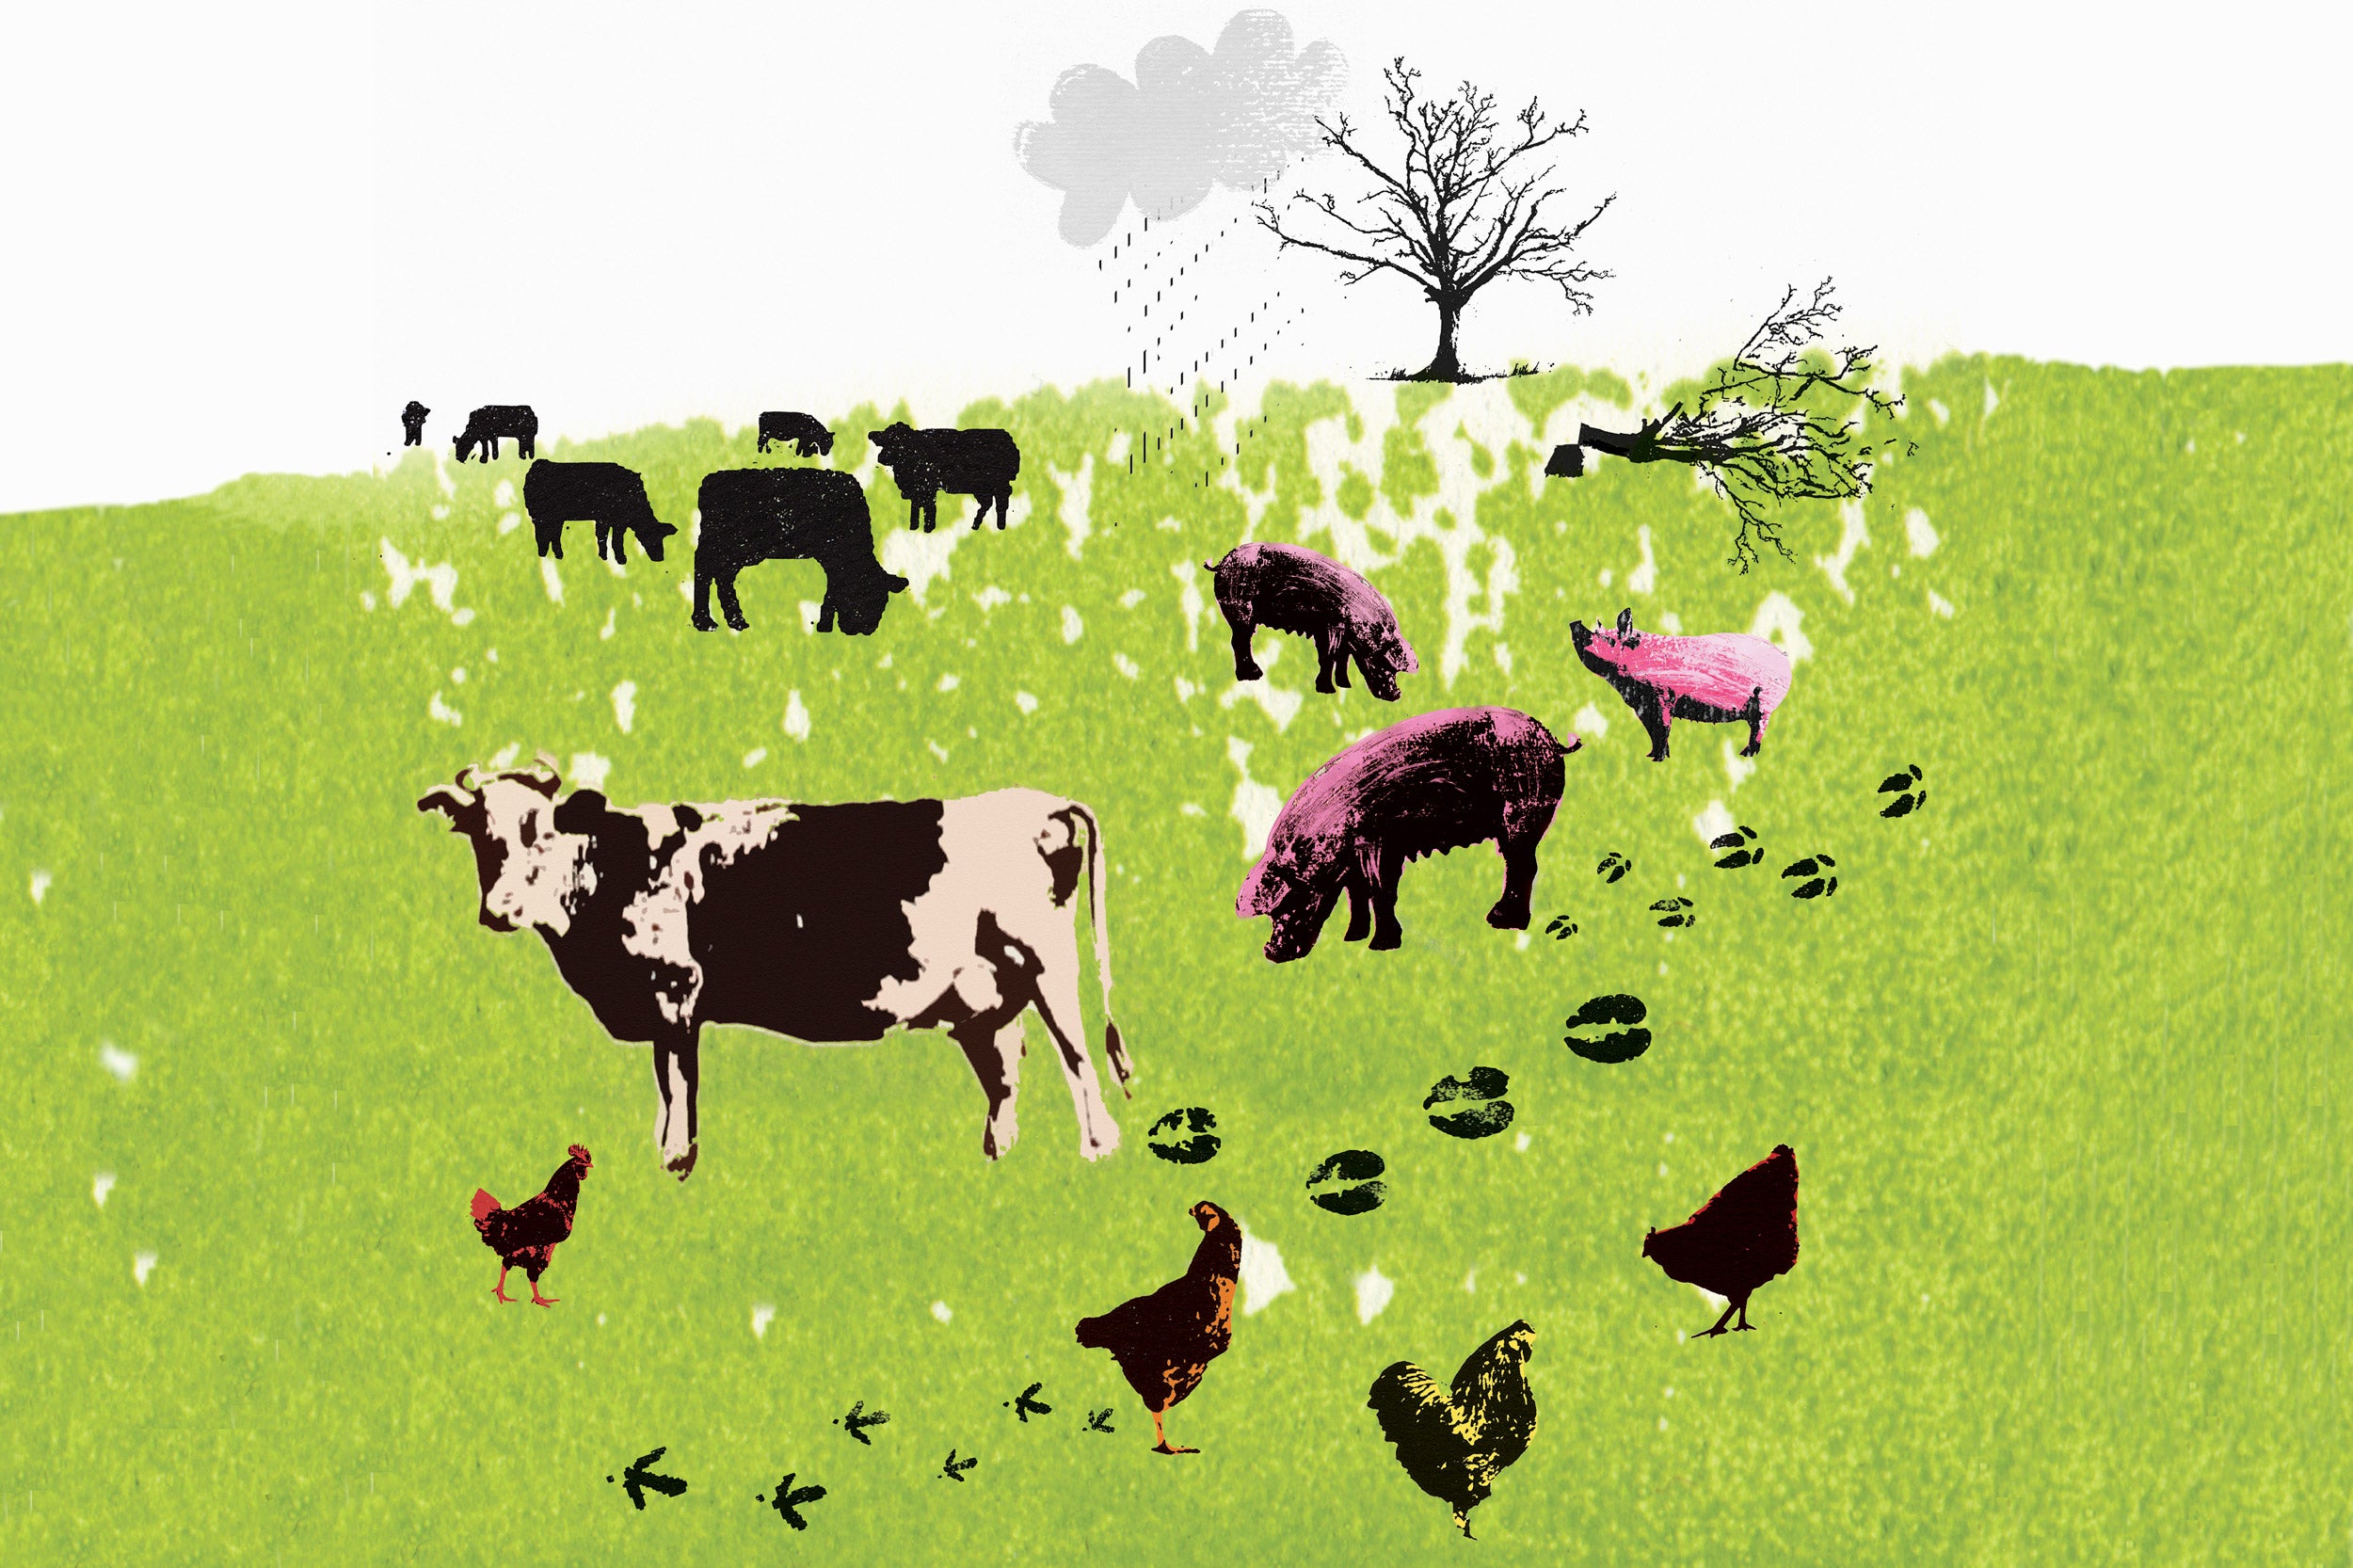 Illustration of farm animals in a field.